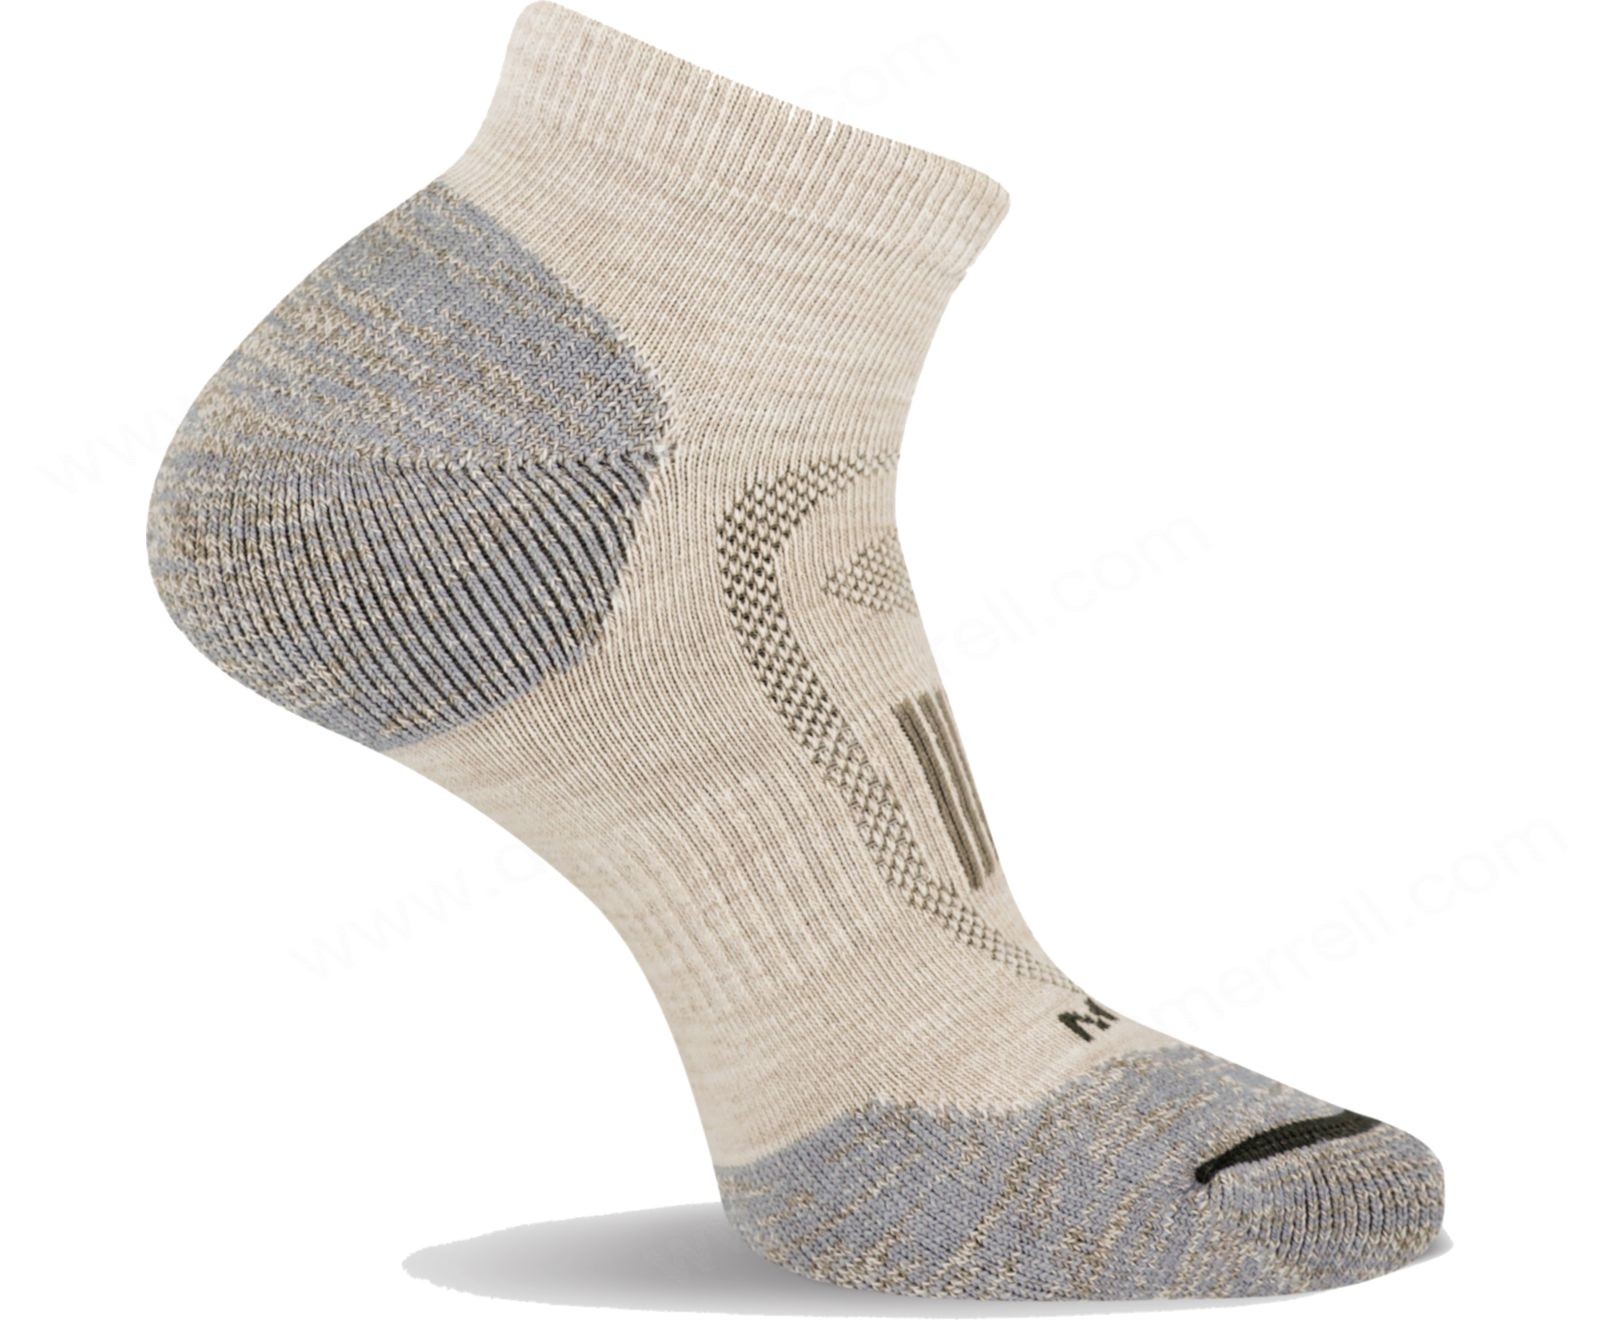 Merrell - Men's Zoned Low Cut Hiker Sock - Merrell - Men's Zoned Low Cut Hiker Sock